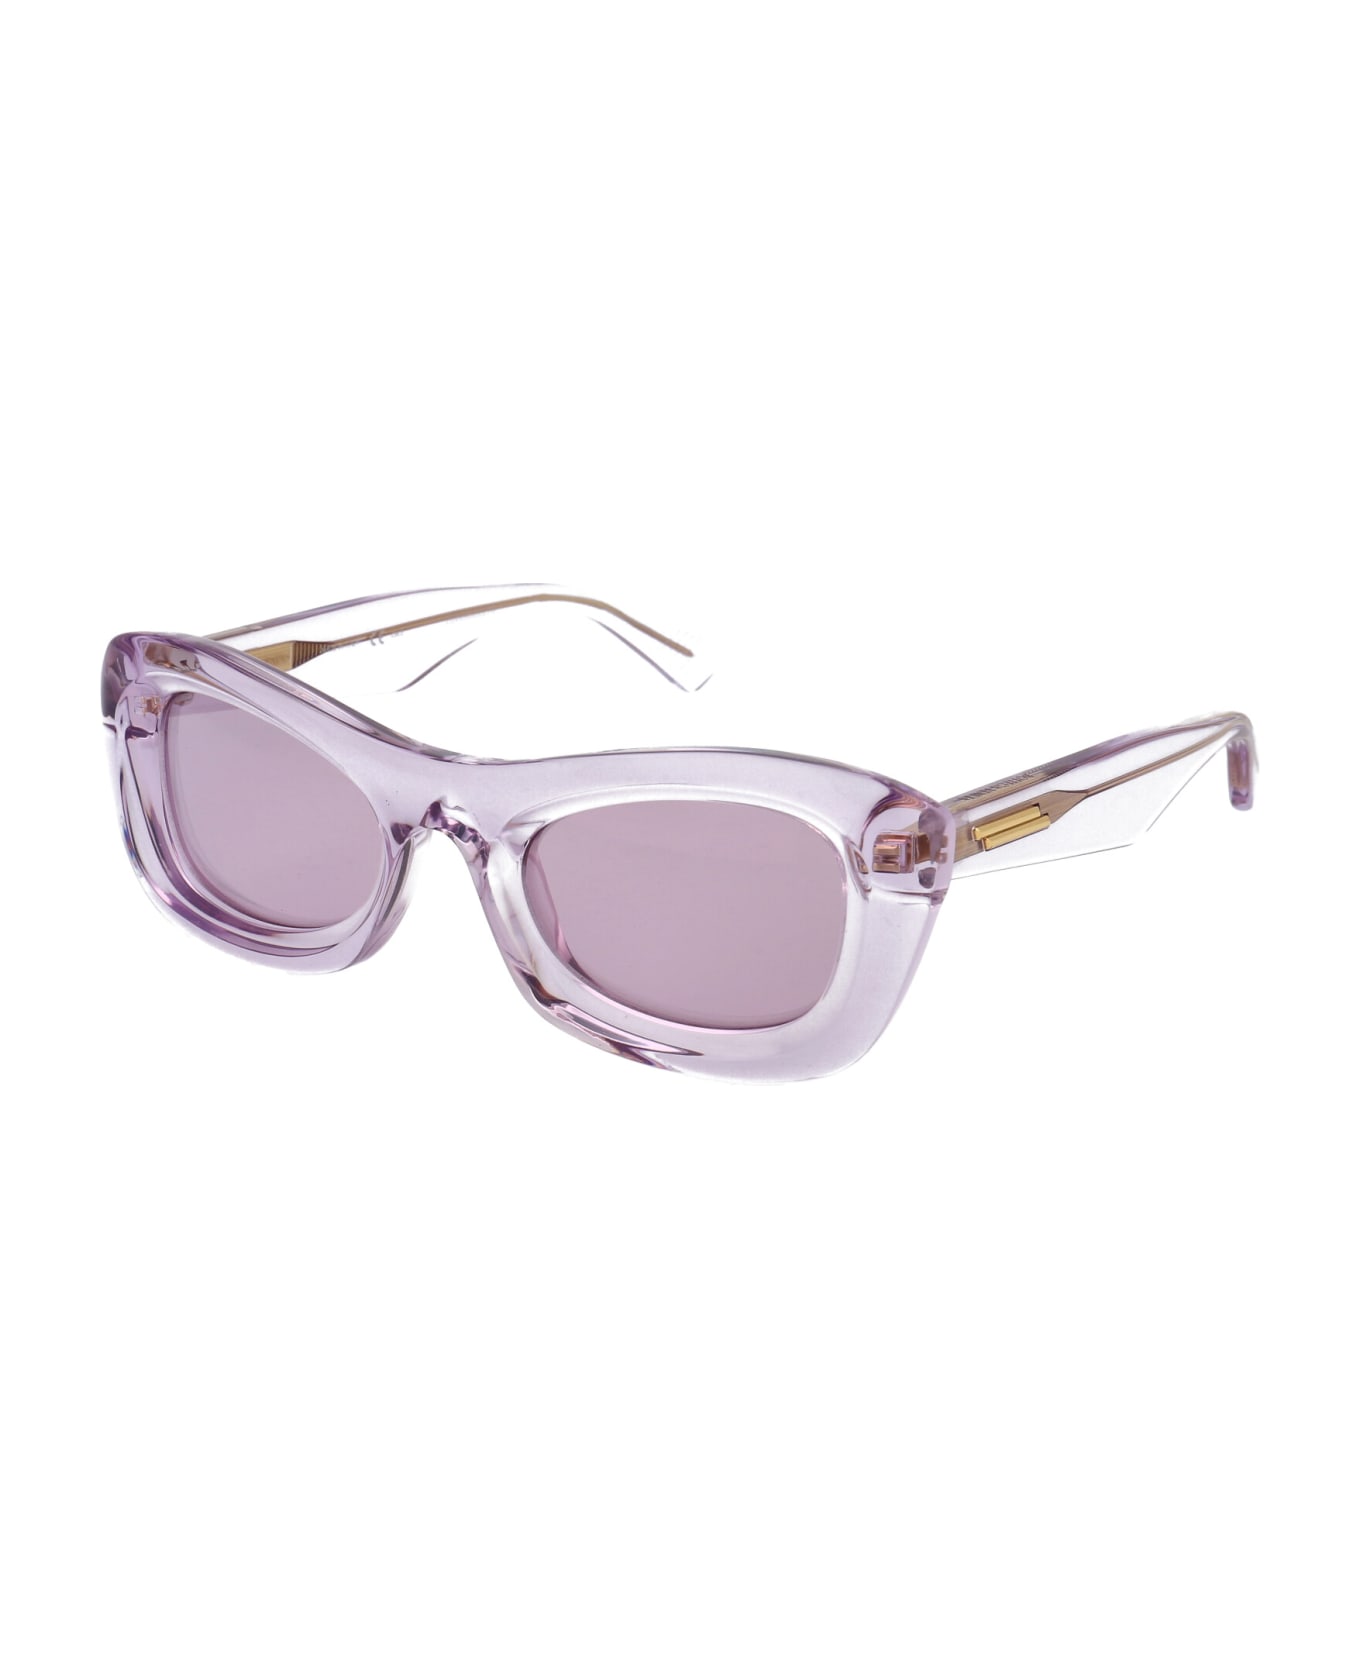 Bottega Veneta Eyewear Bv1088s Sunglasses - 005 VIOLET VIOLET VIOLET